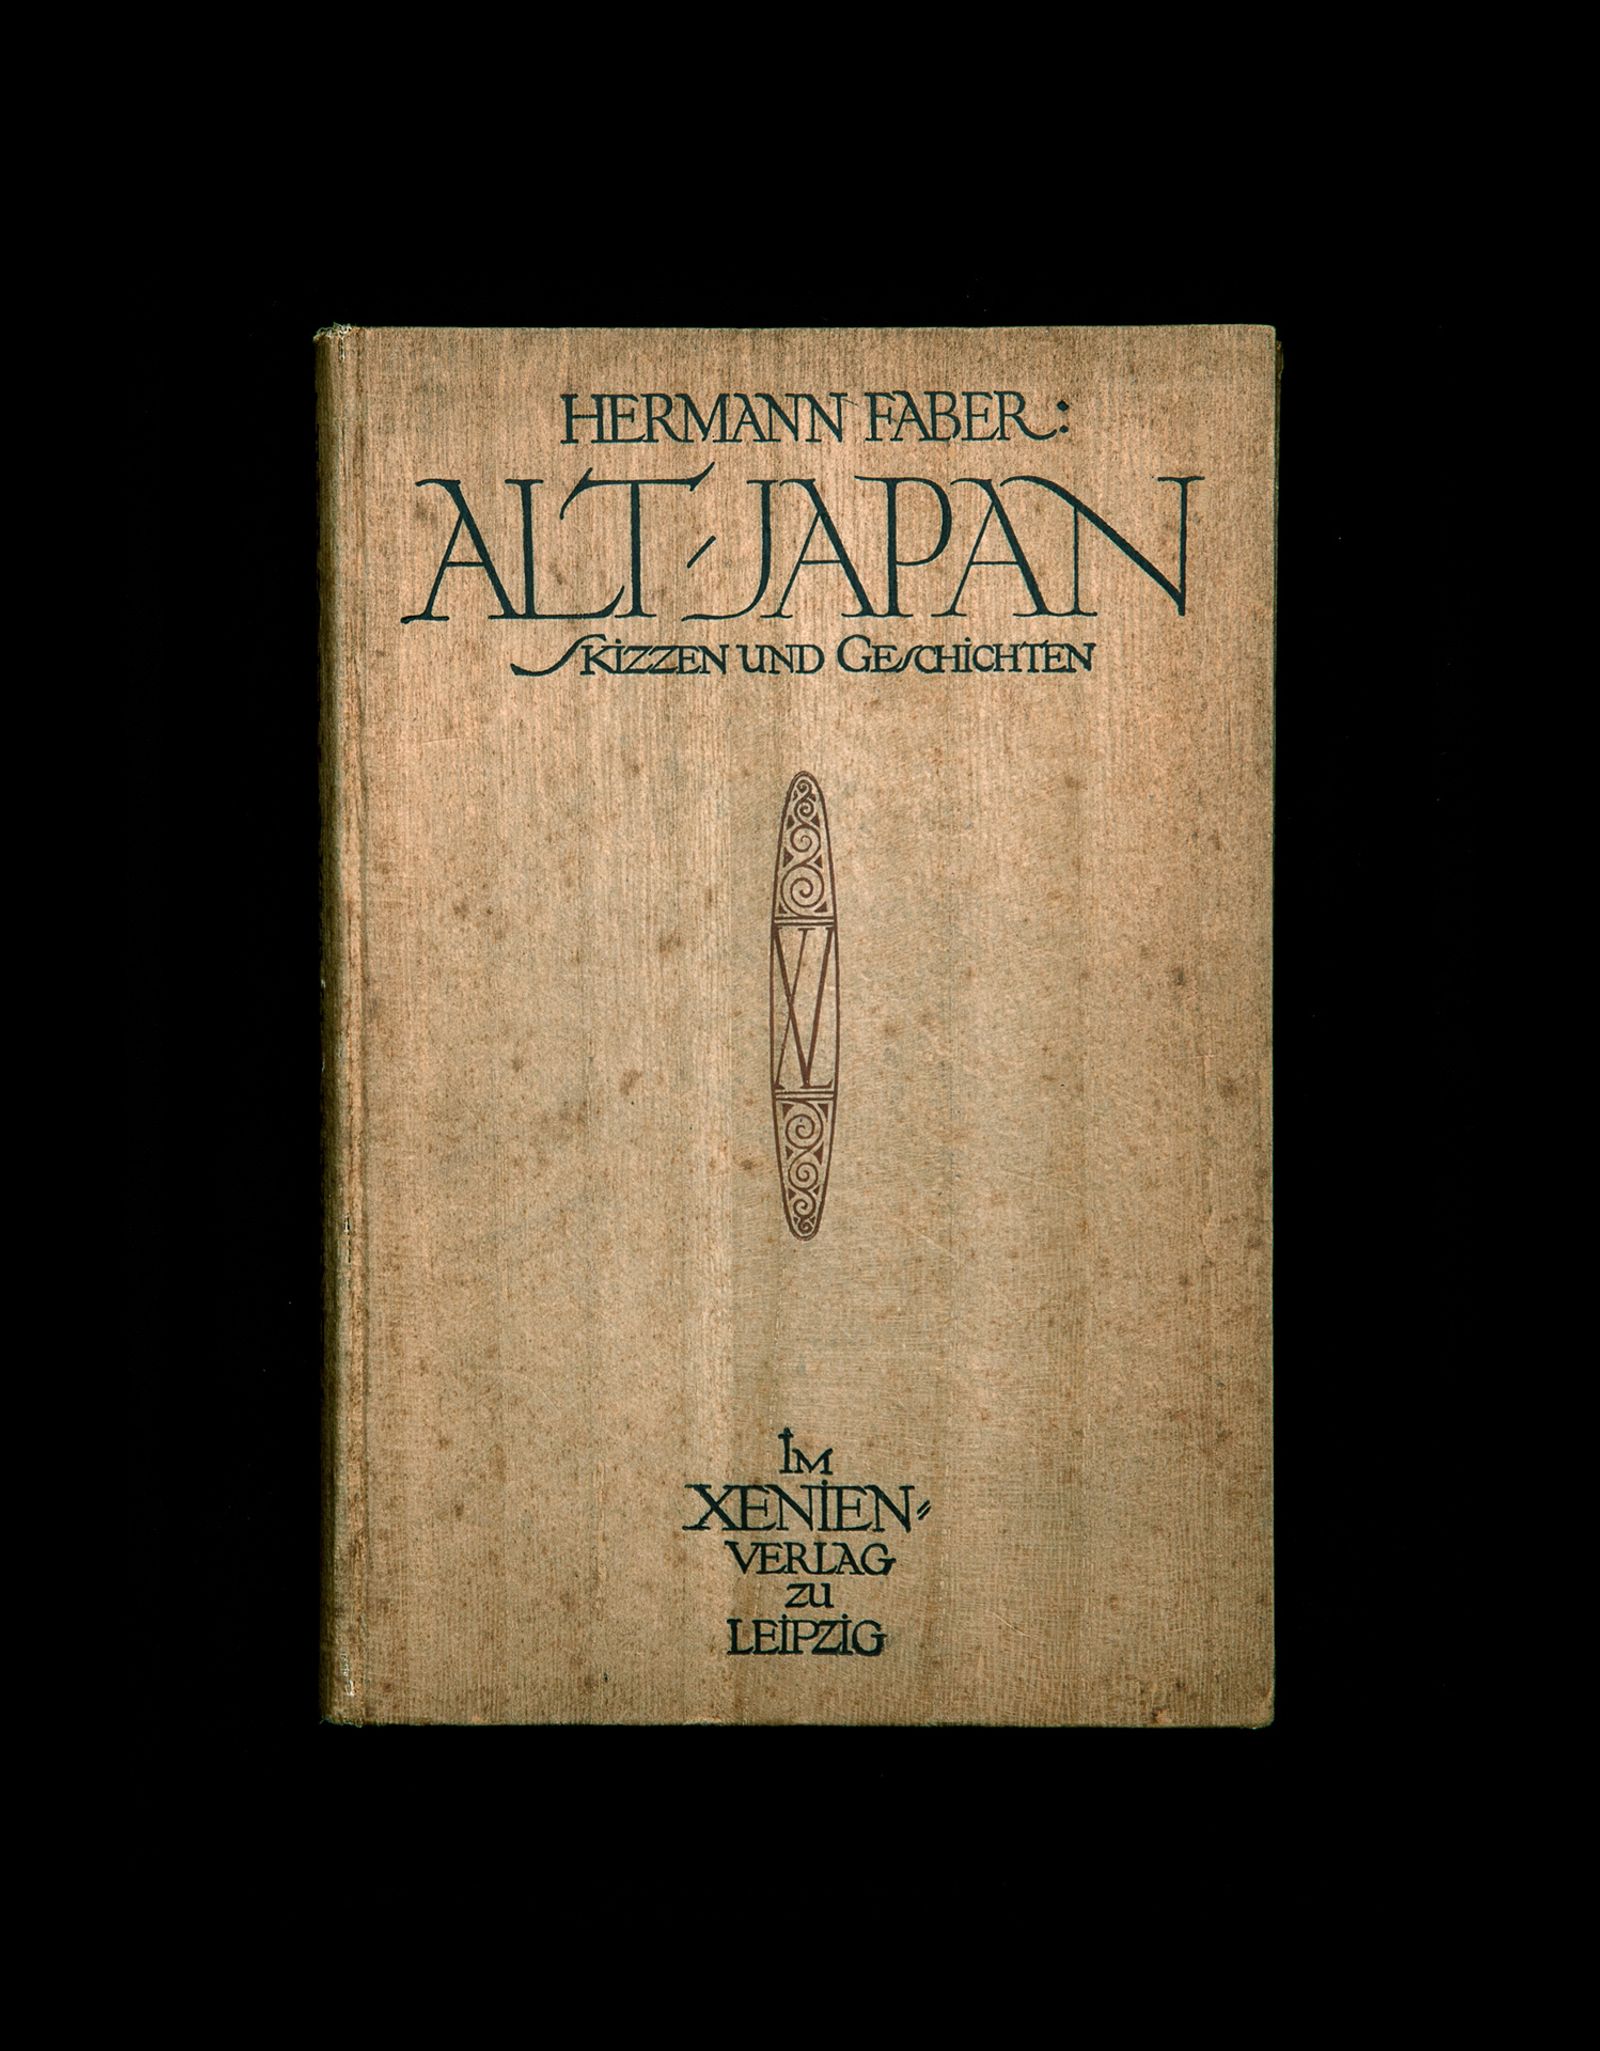 © Lihuel González - To listen to this audio book click on this link : https://archive.org/details/False_friends/Alt+Japan.mp3